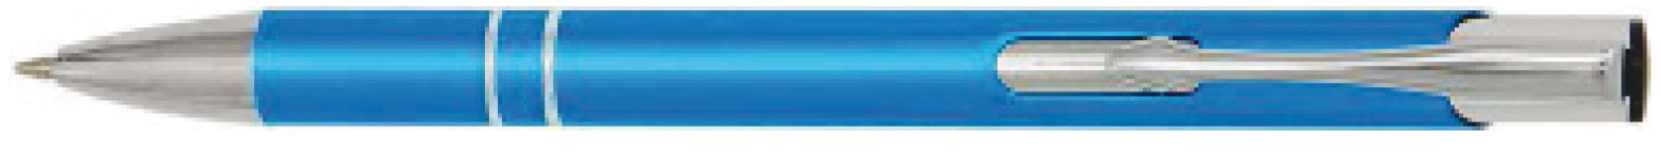 BestPen - metal promotional pen with engraving C-14